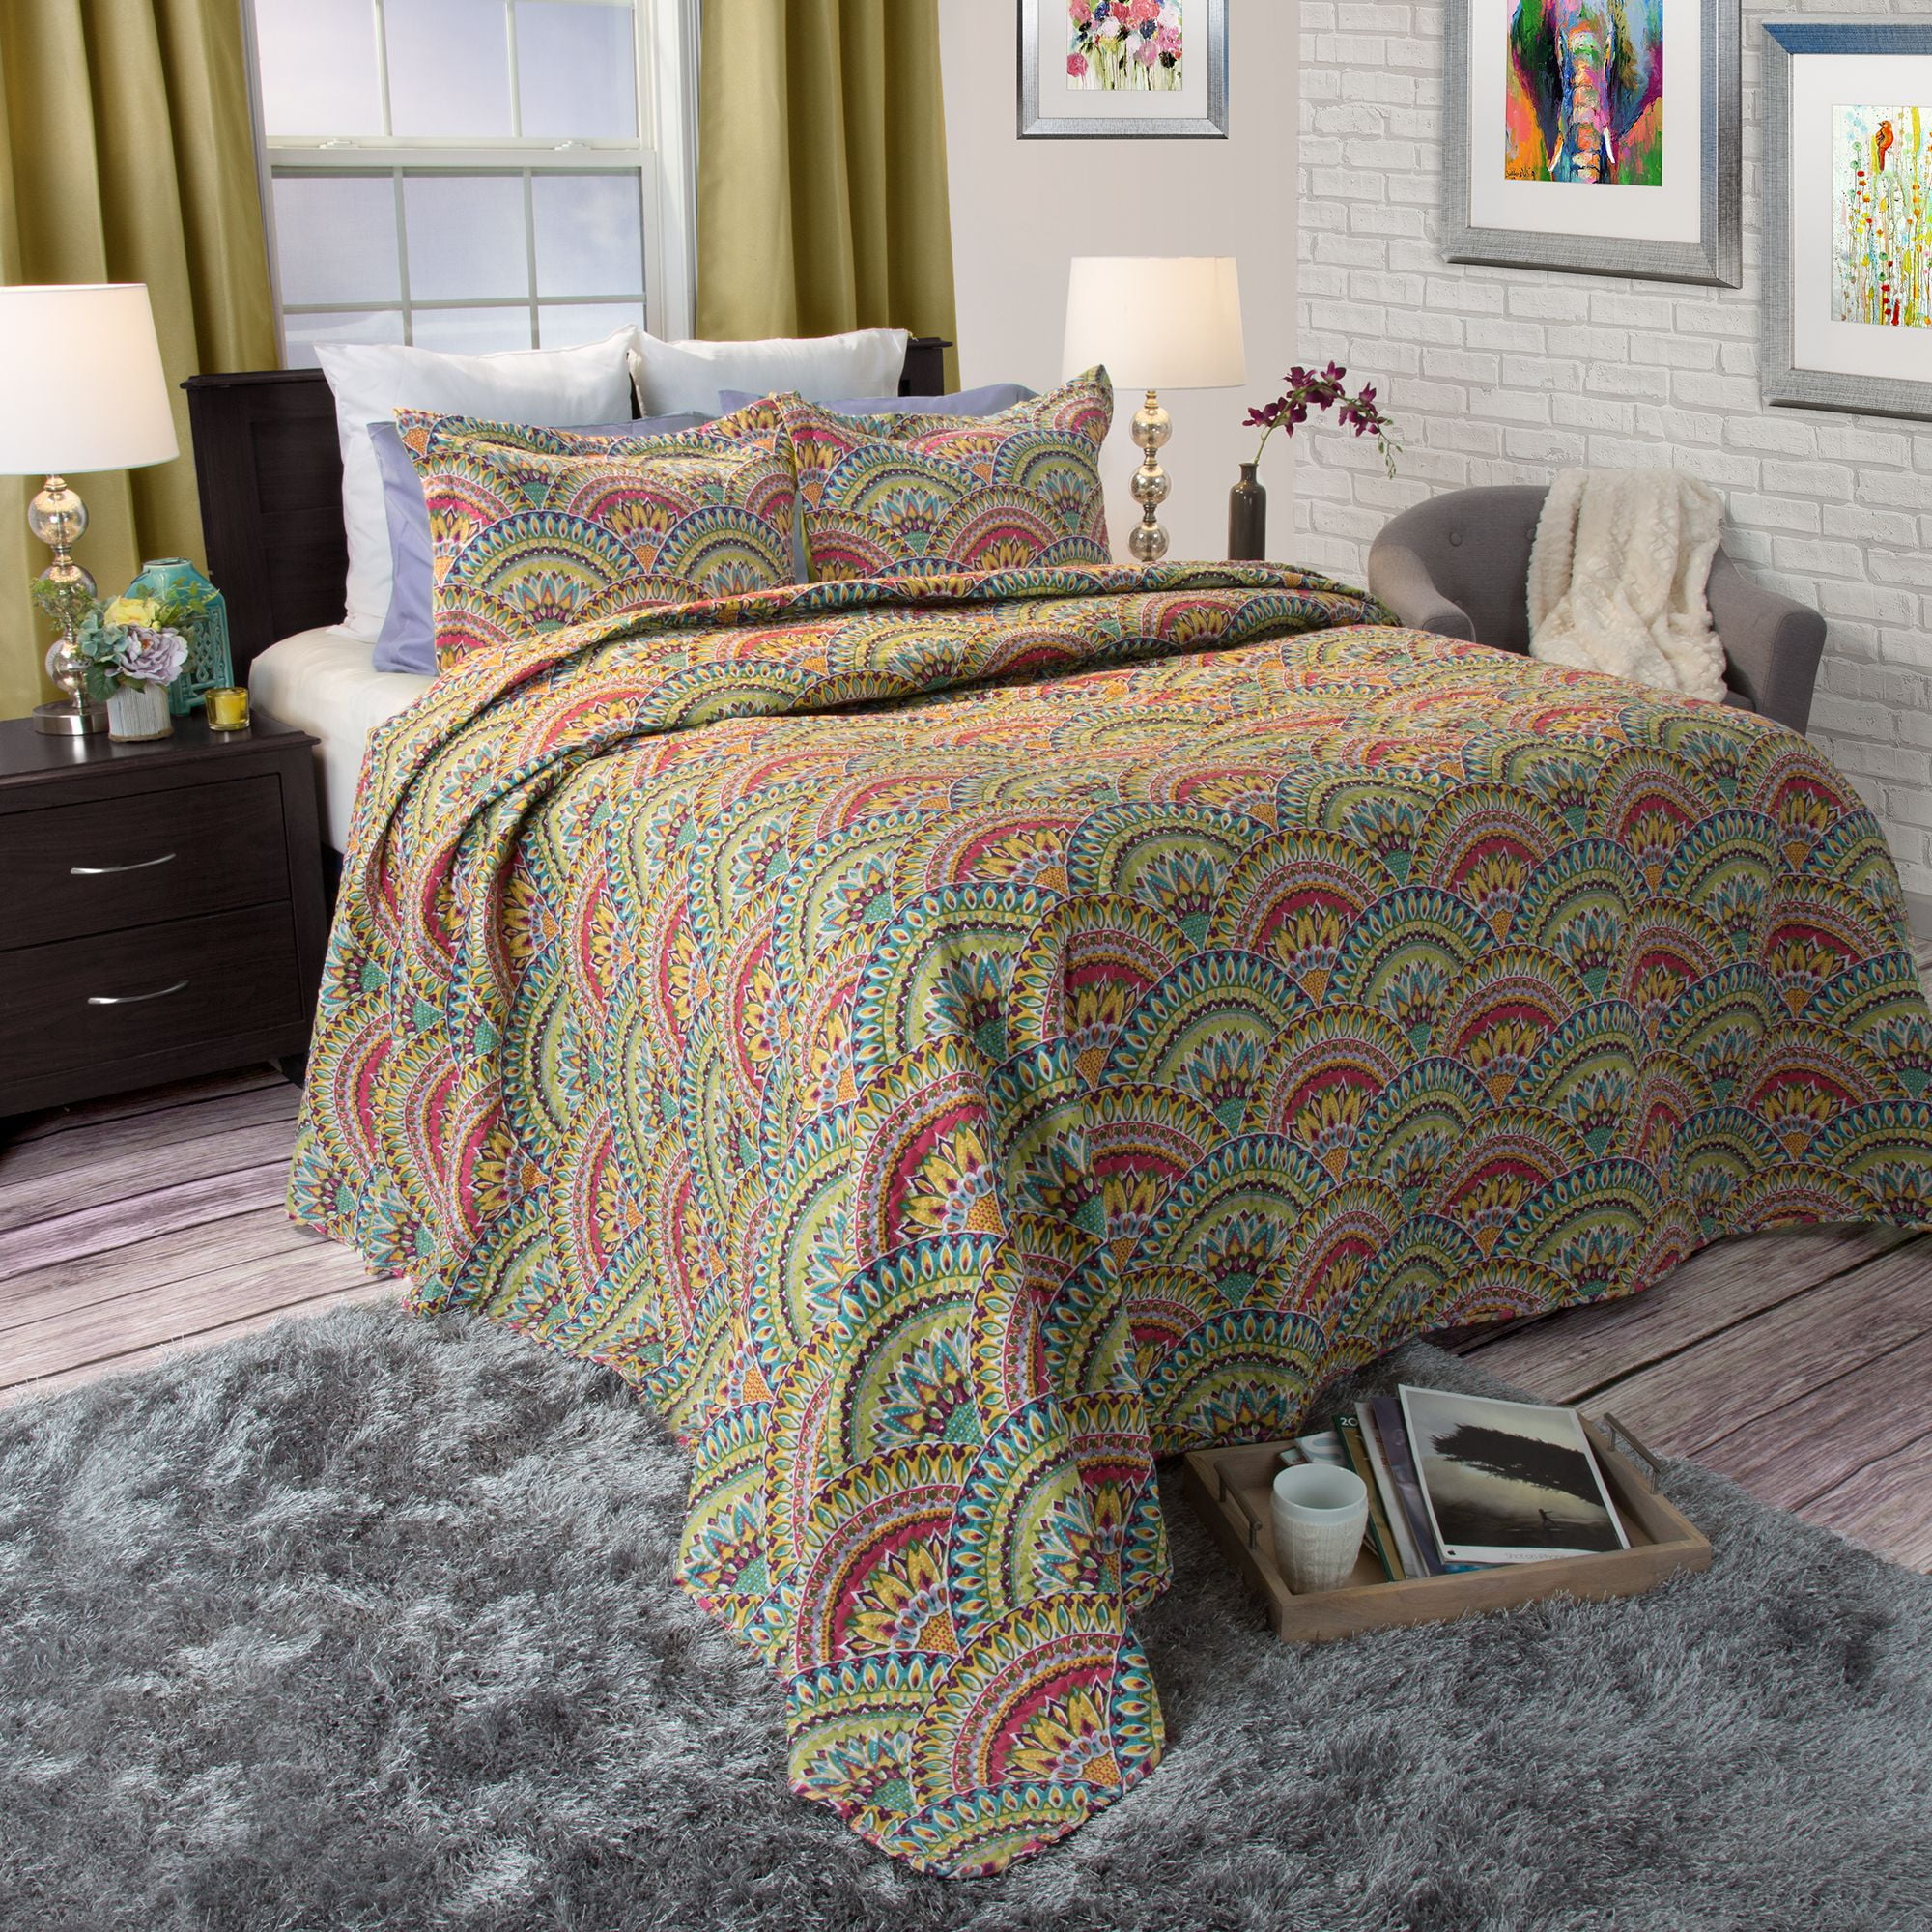 Somerset Home Printed Savannah Quilt Bedding Set for sale online 